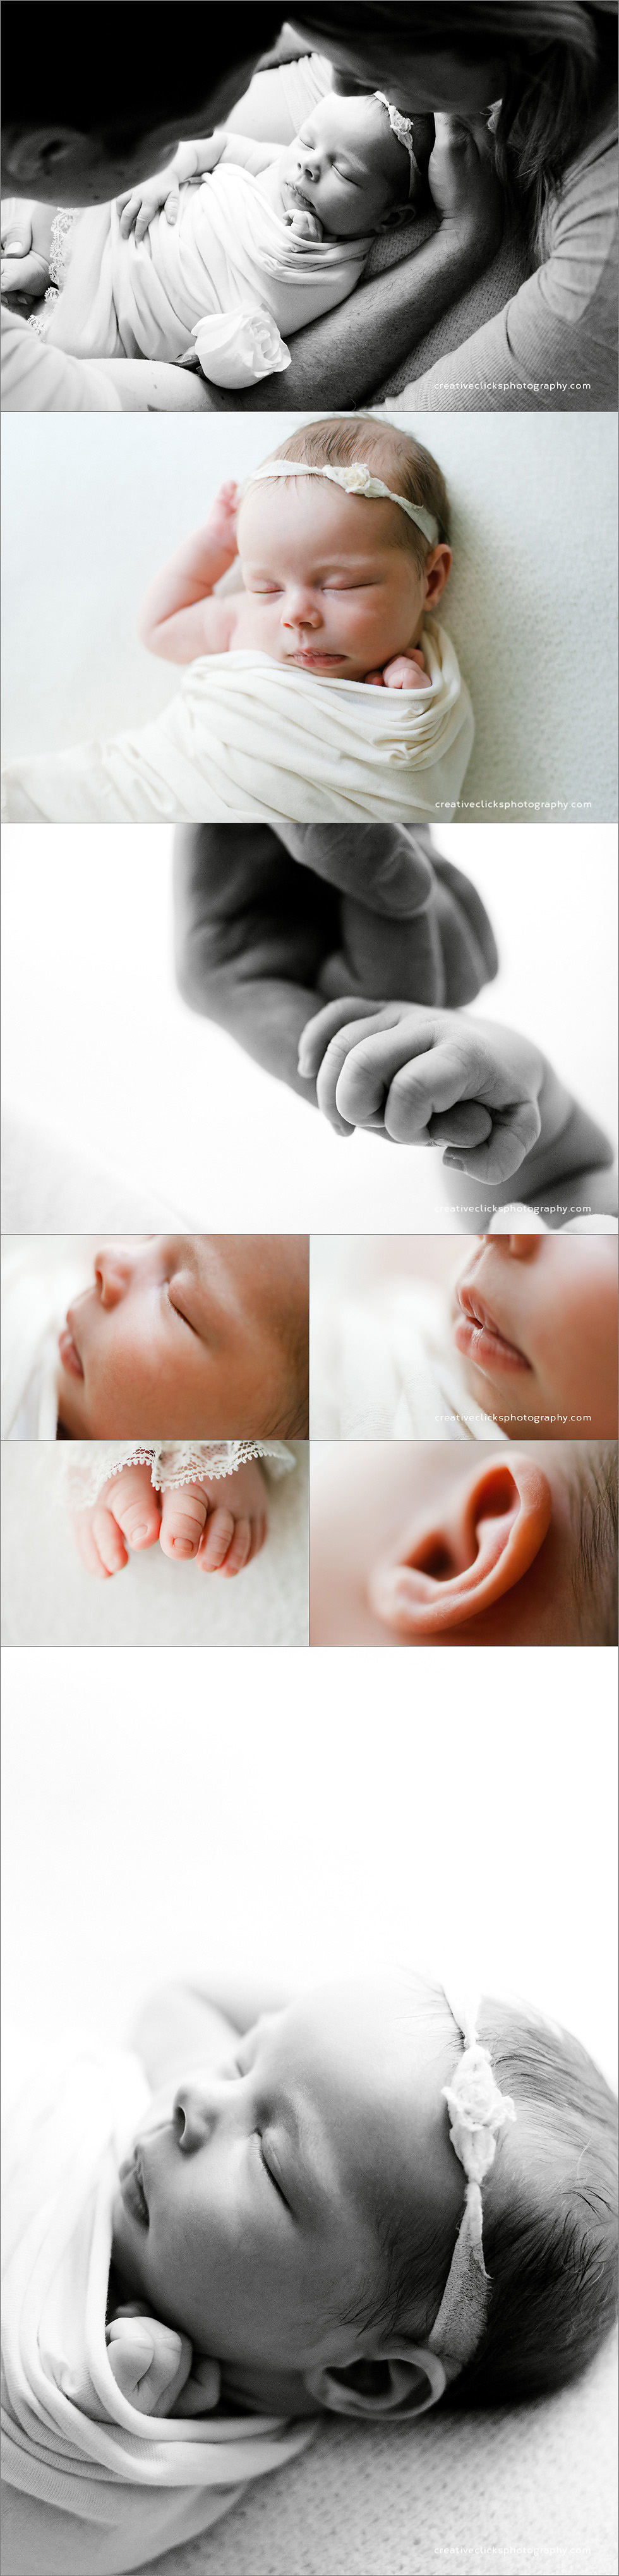 newborn closeup images